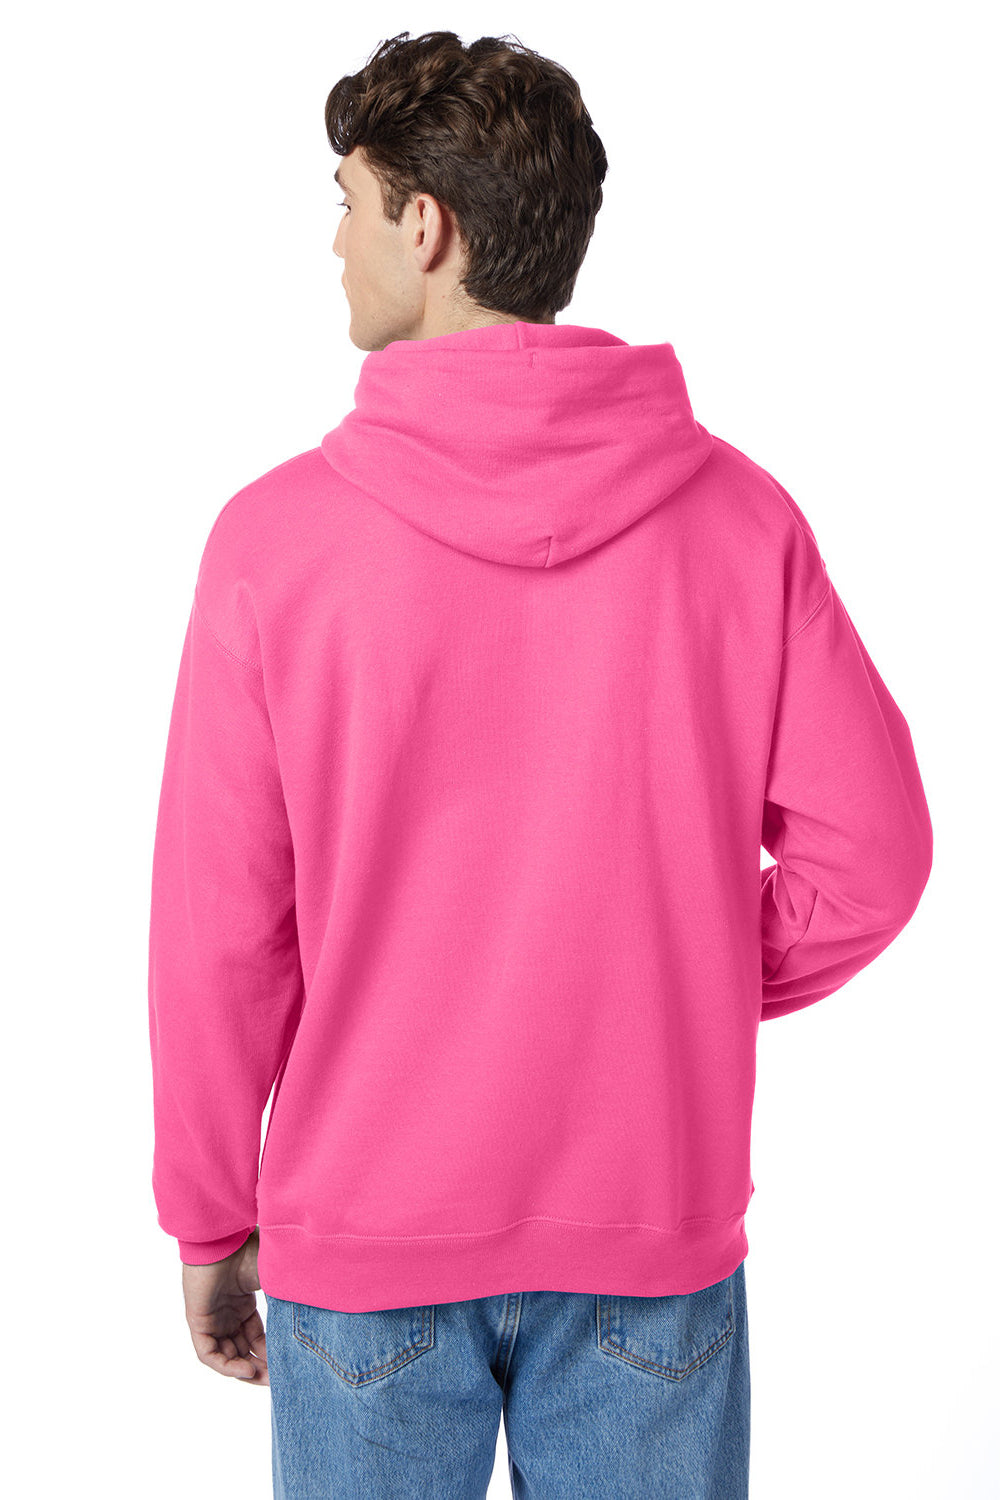 Hanes P170 Mens EcoSmart Print Pro XP Hooded Sweatshirt Hoodie Safety Pink Back